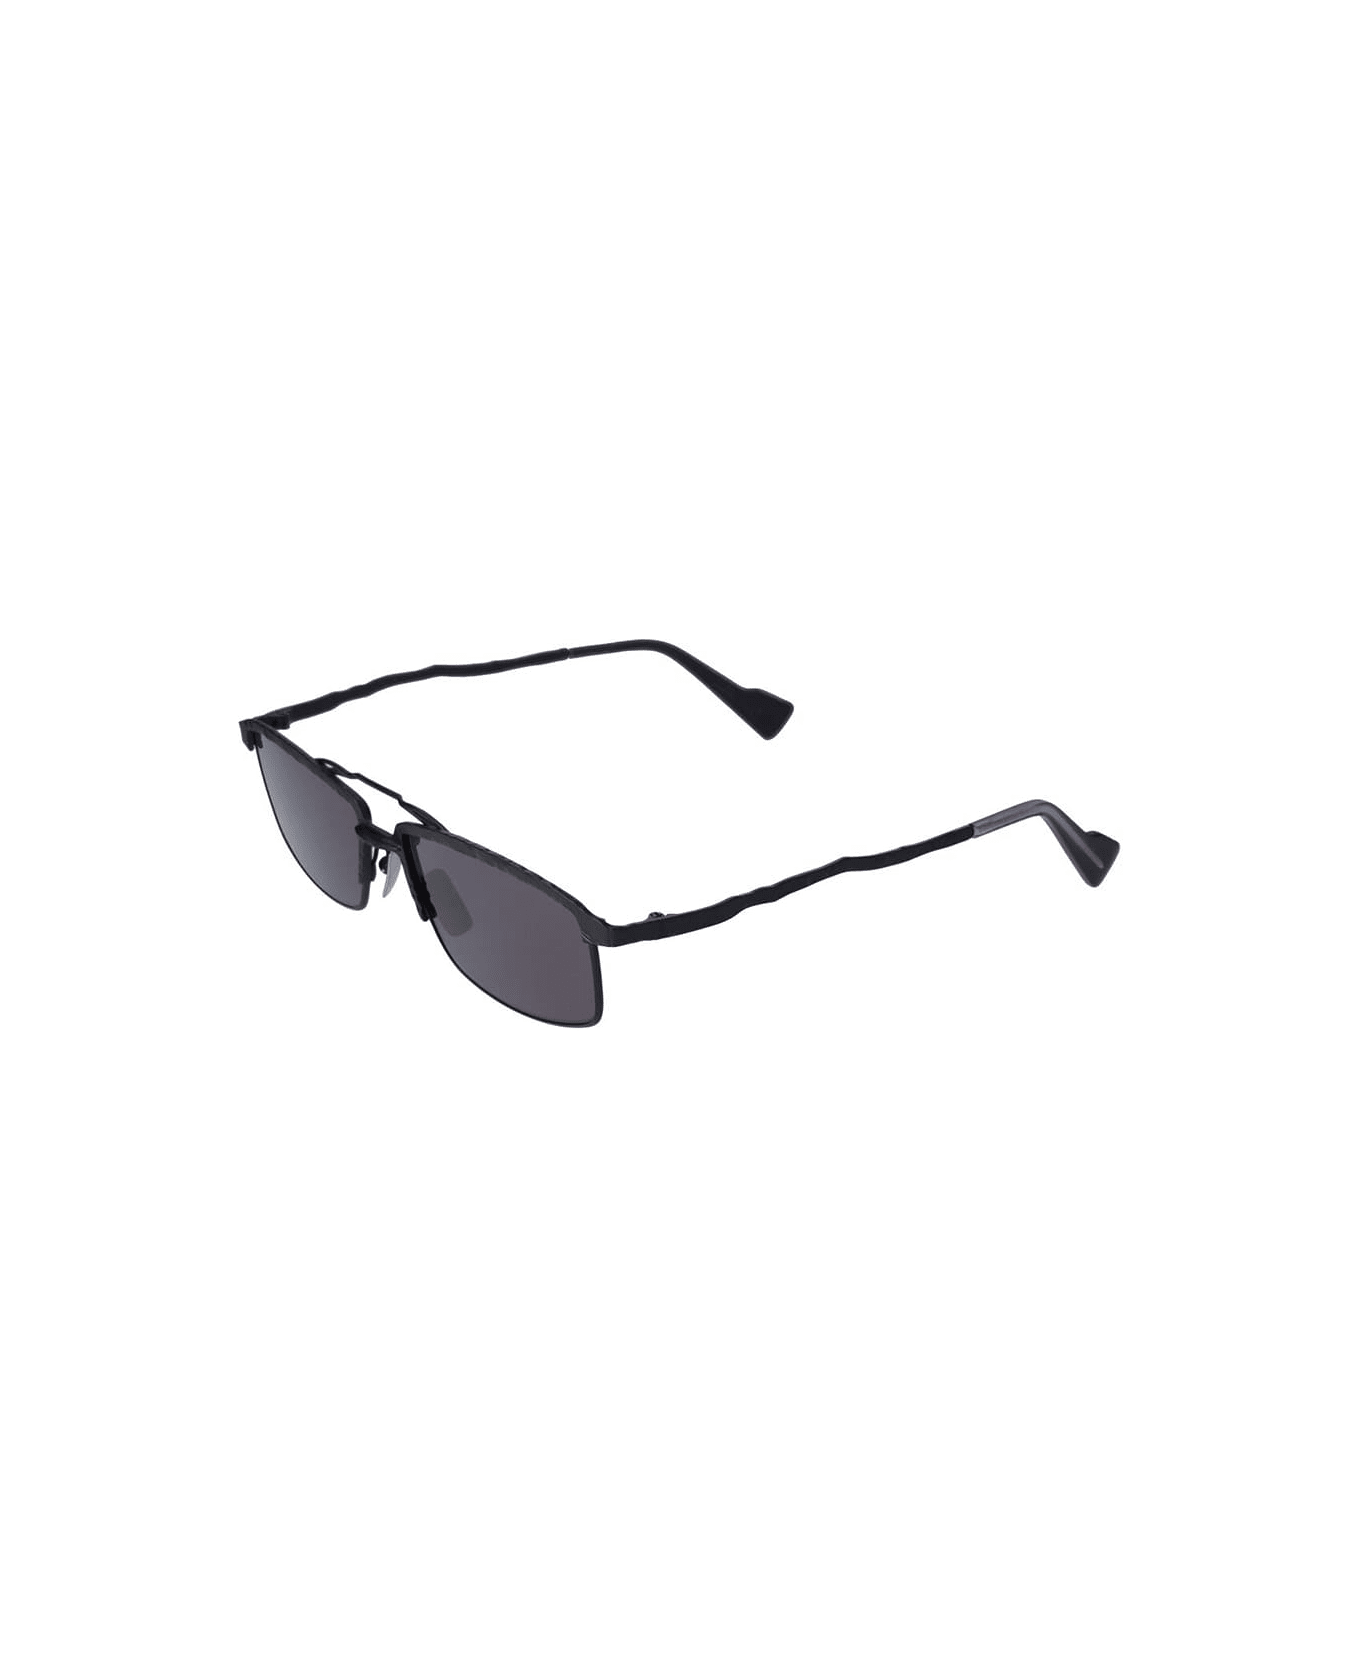 Kuboraum Mask H57 - Black Matte Sunglasses - Black